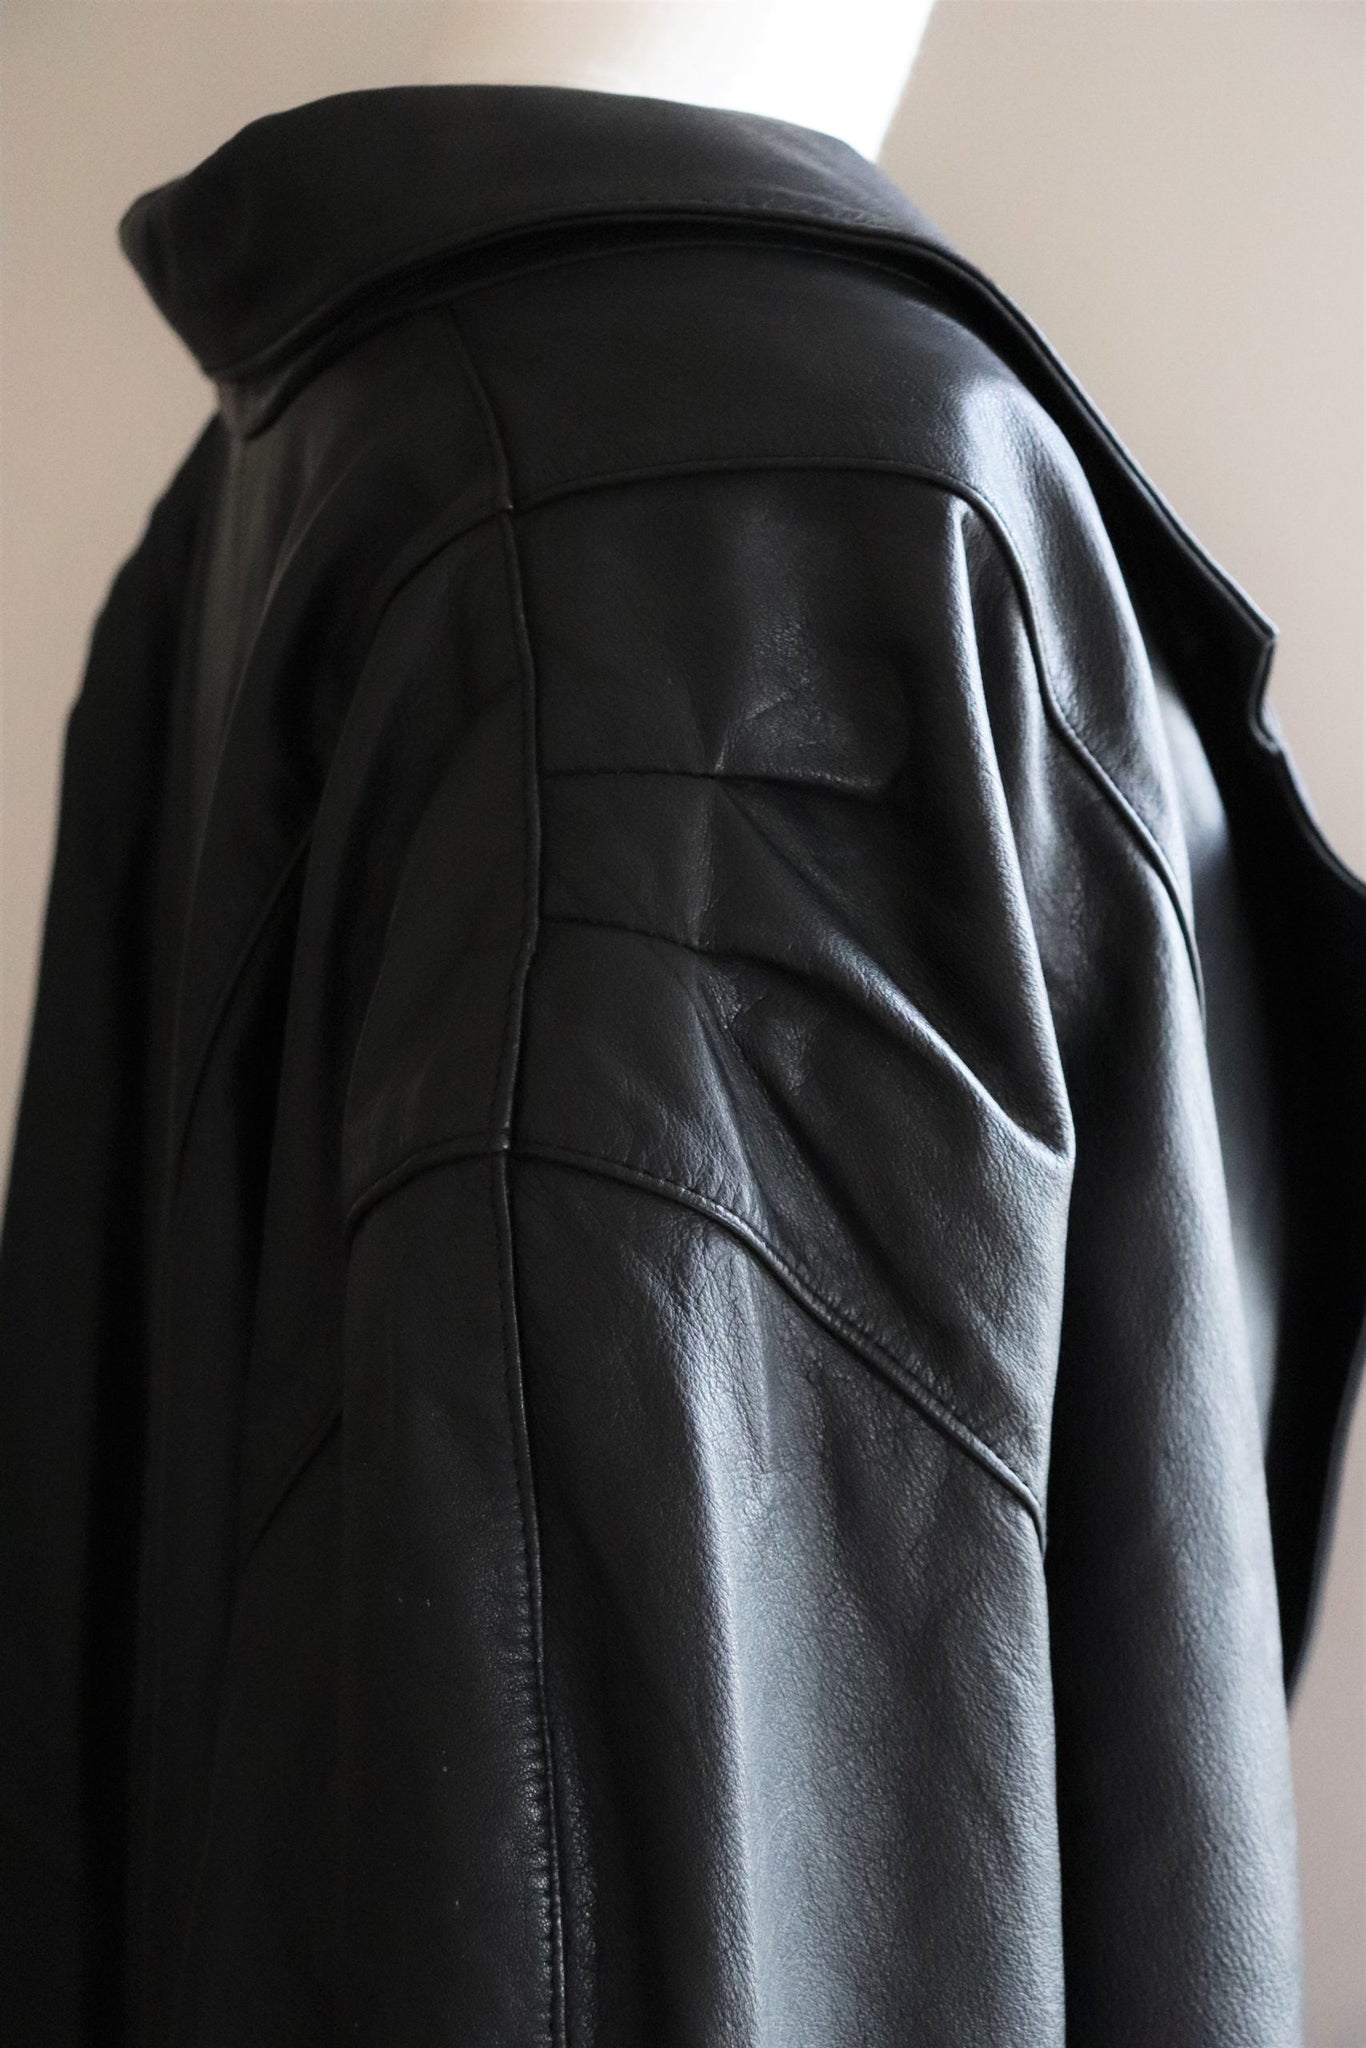 80s Long Leather Jacket